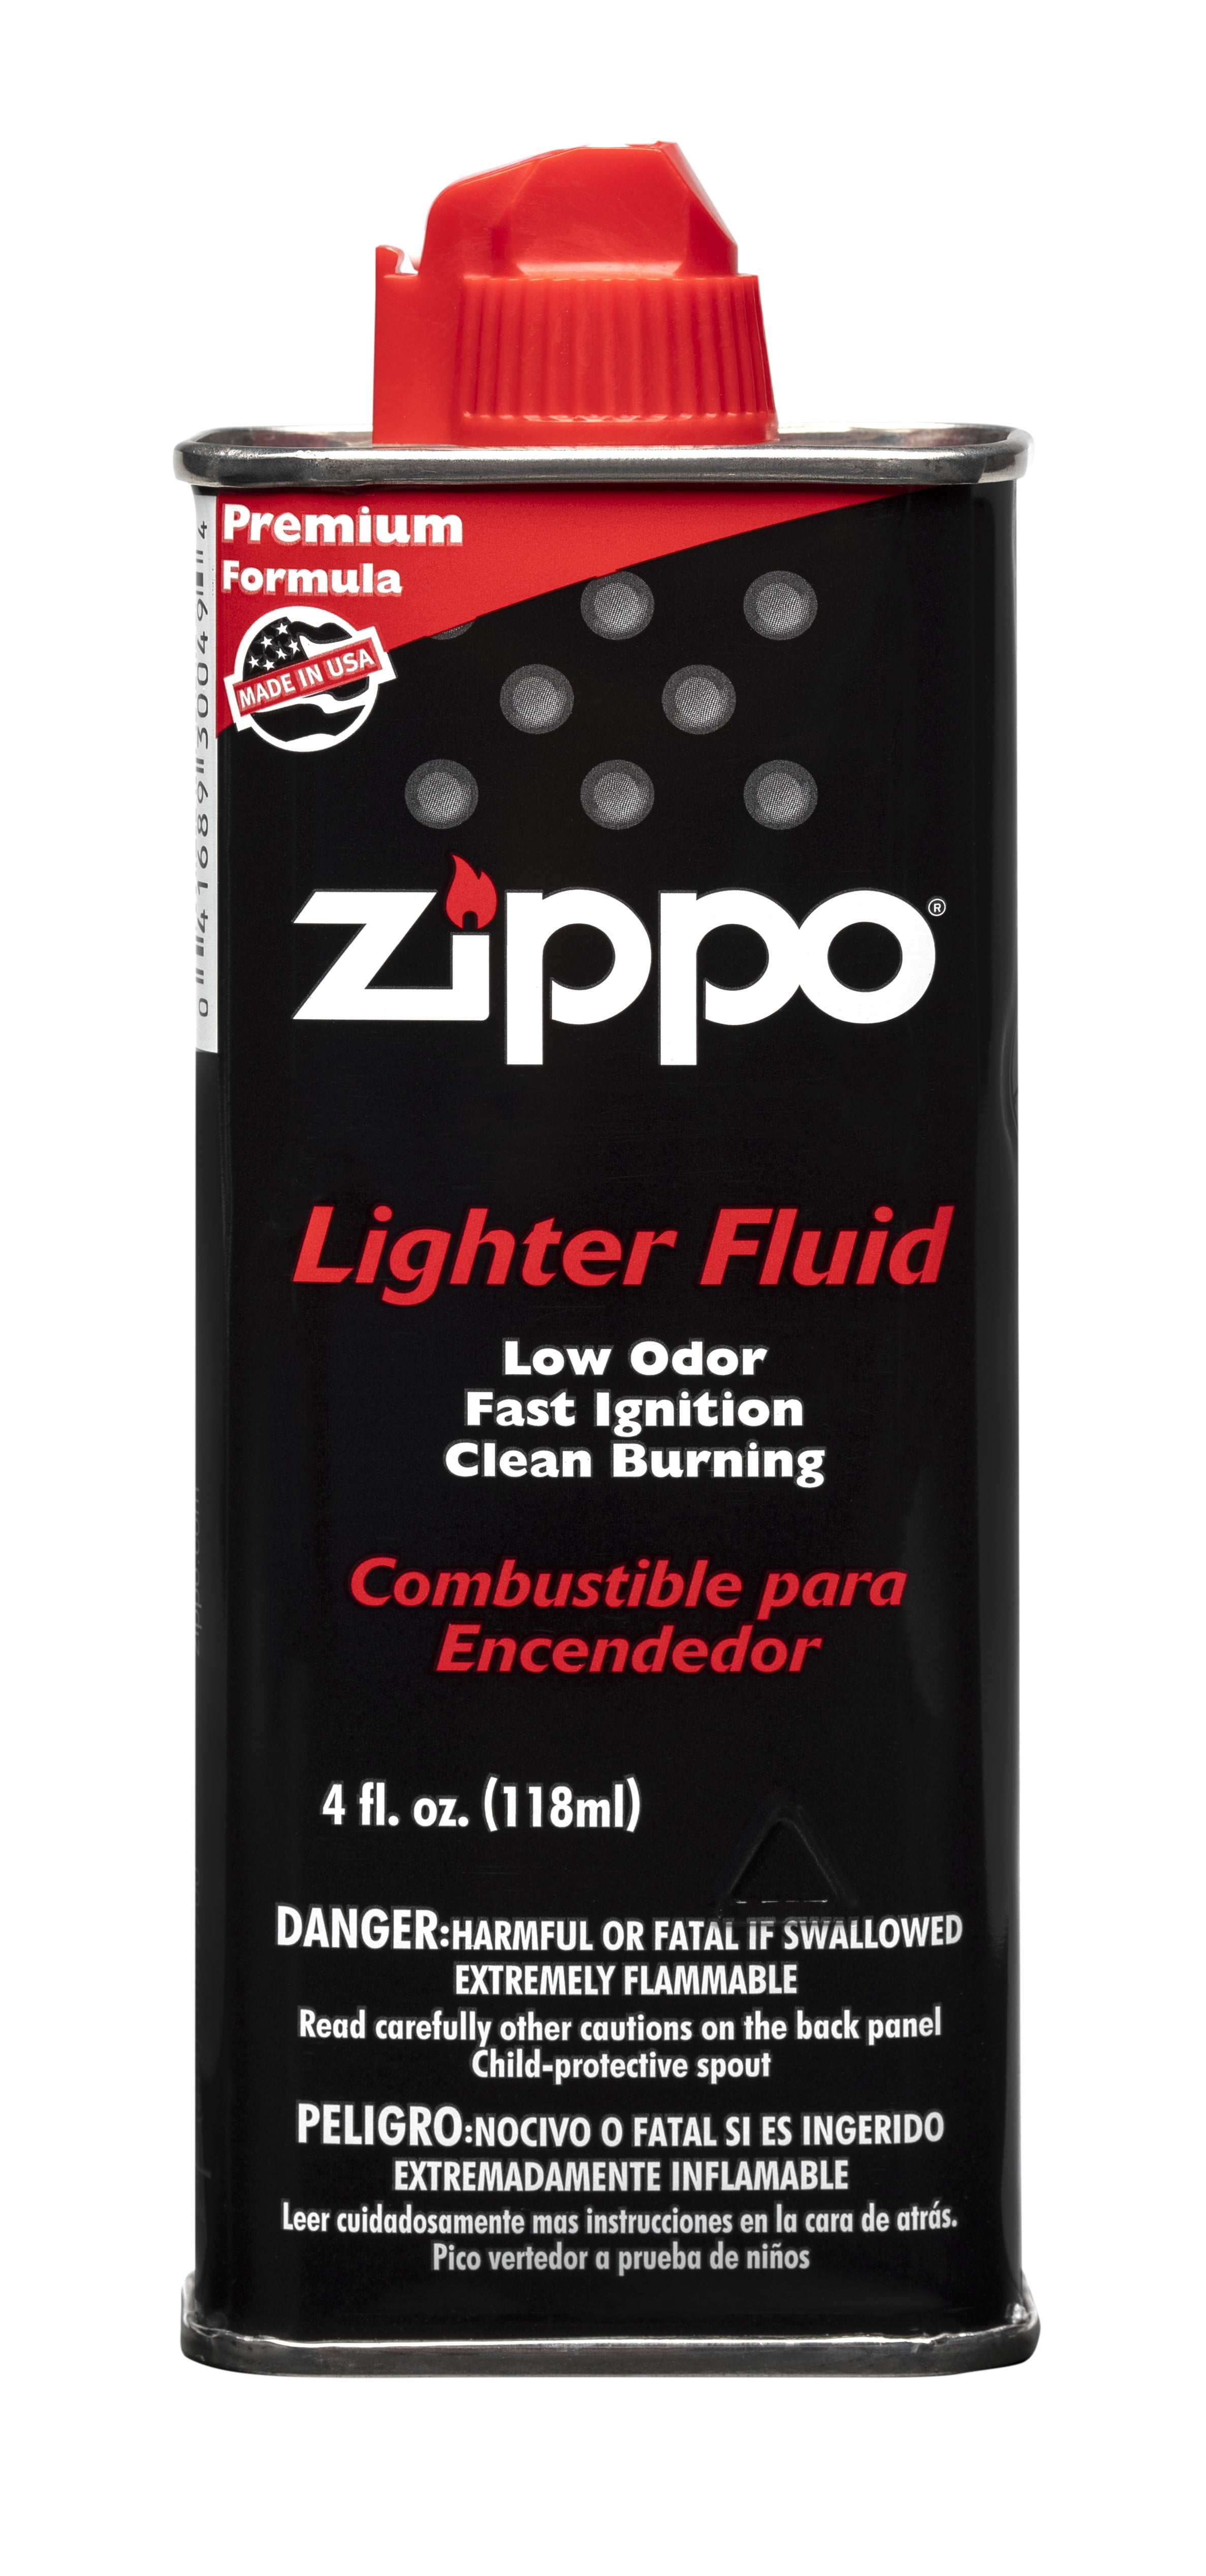 Oil Lighters Assorted Las Vegas # L122 (1 doz.) Lighter fluid NOT included.